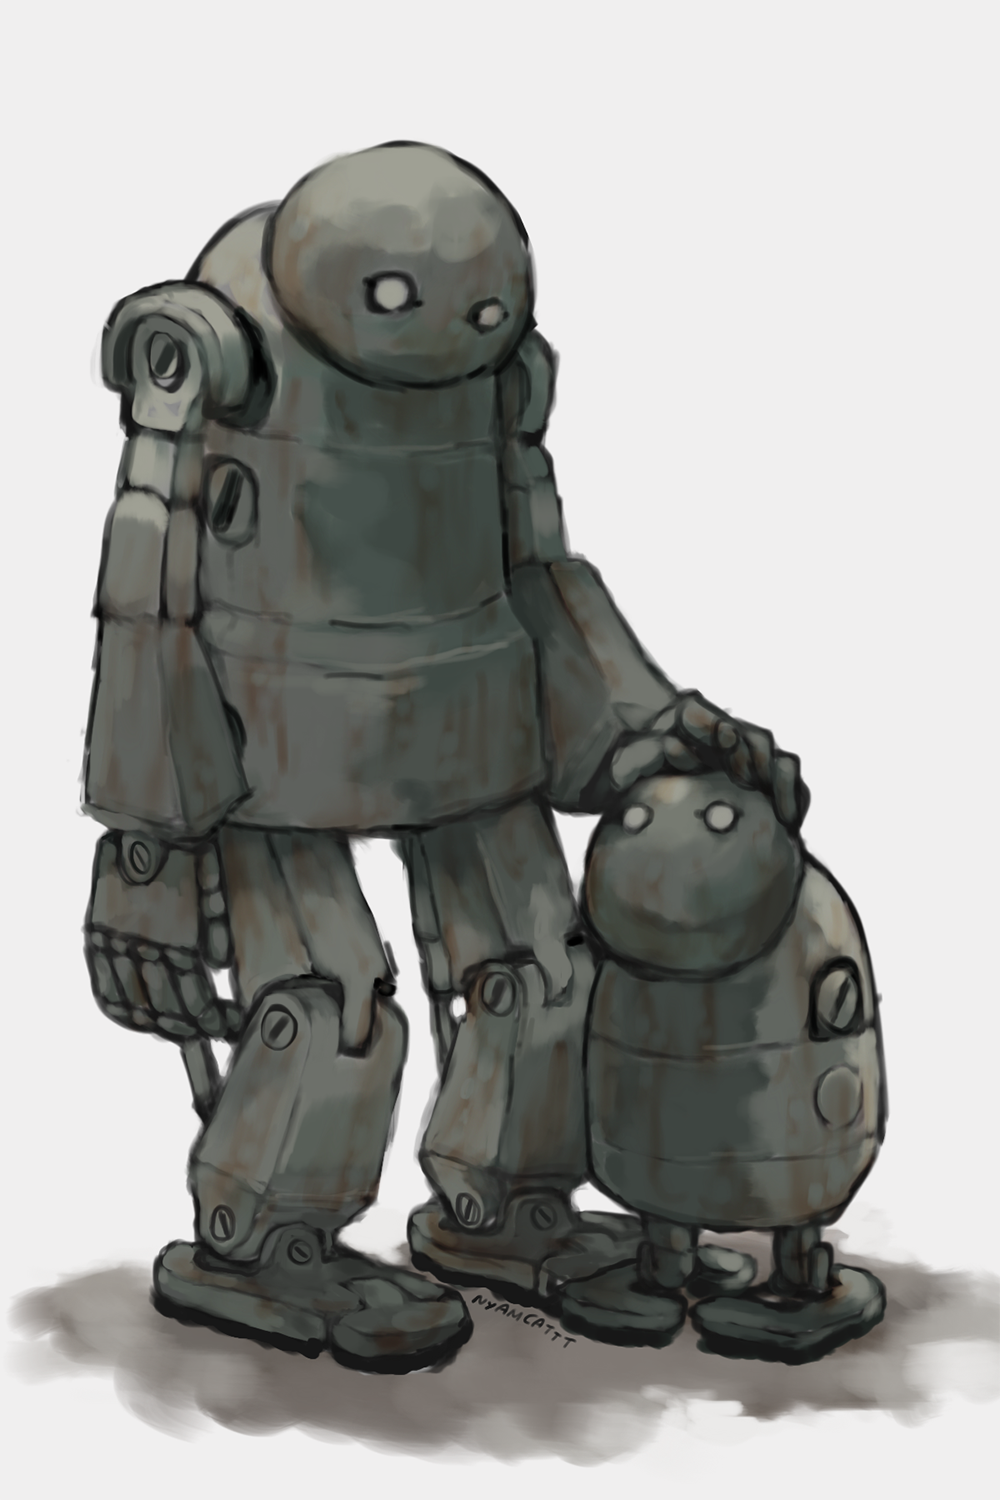 Nier: Automata Becoming Gods